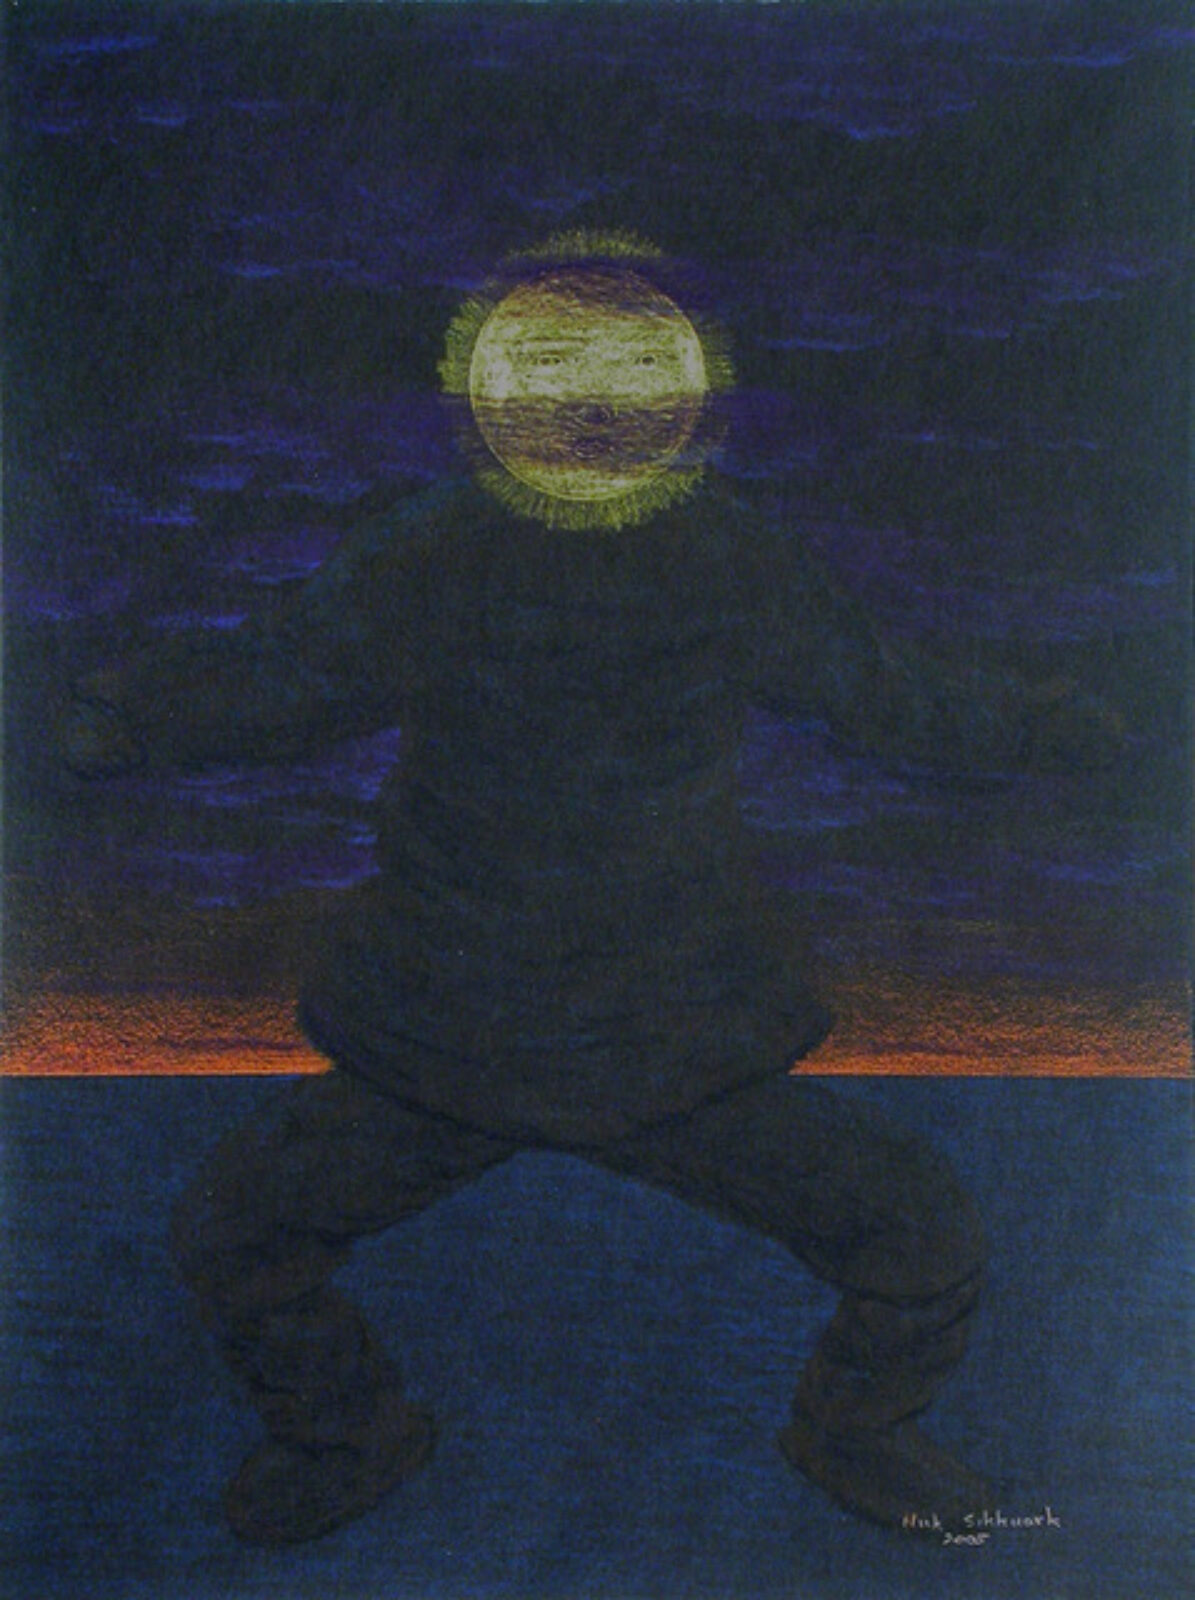 Nick Sikkuark - untitled (moon spirit)